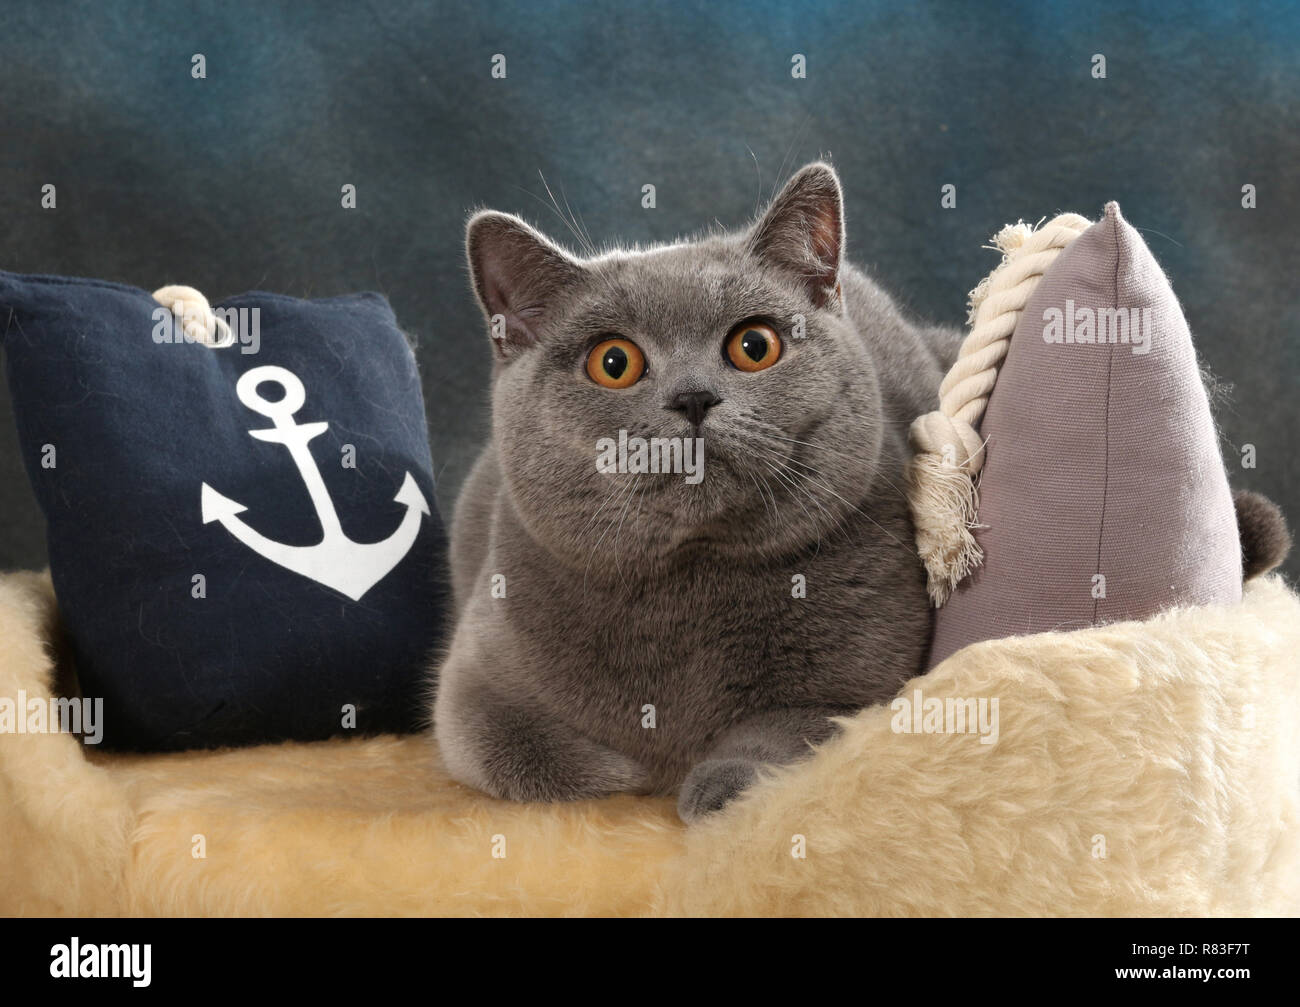 british shorthair cat, blue, lying between pillows Stock Photo